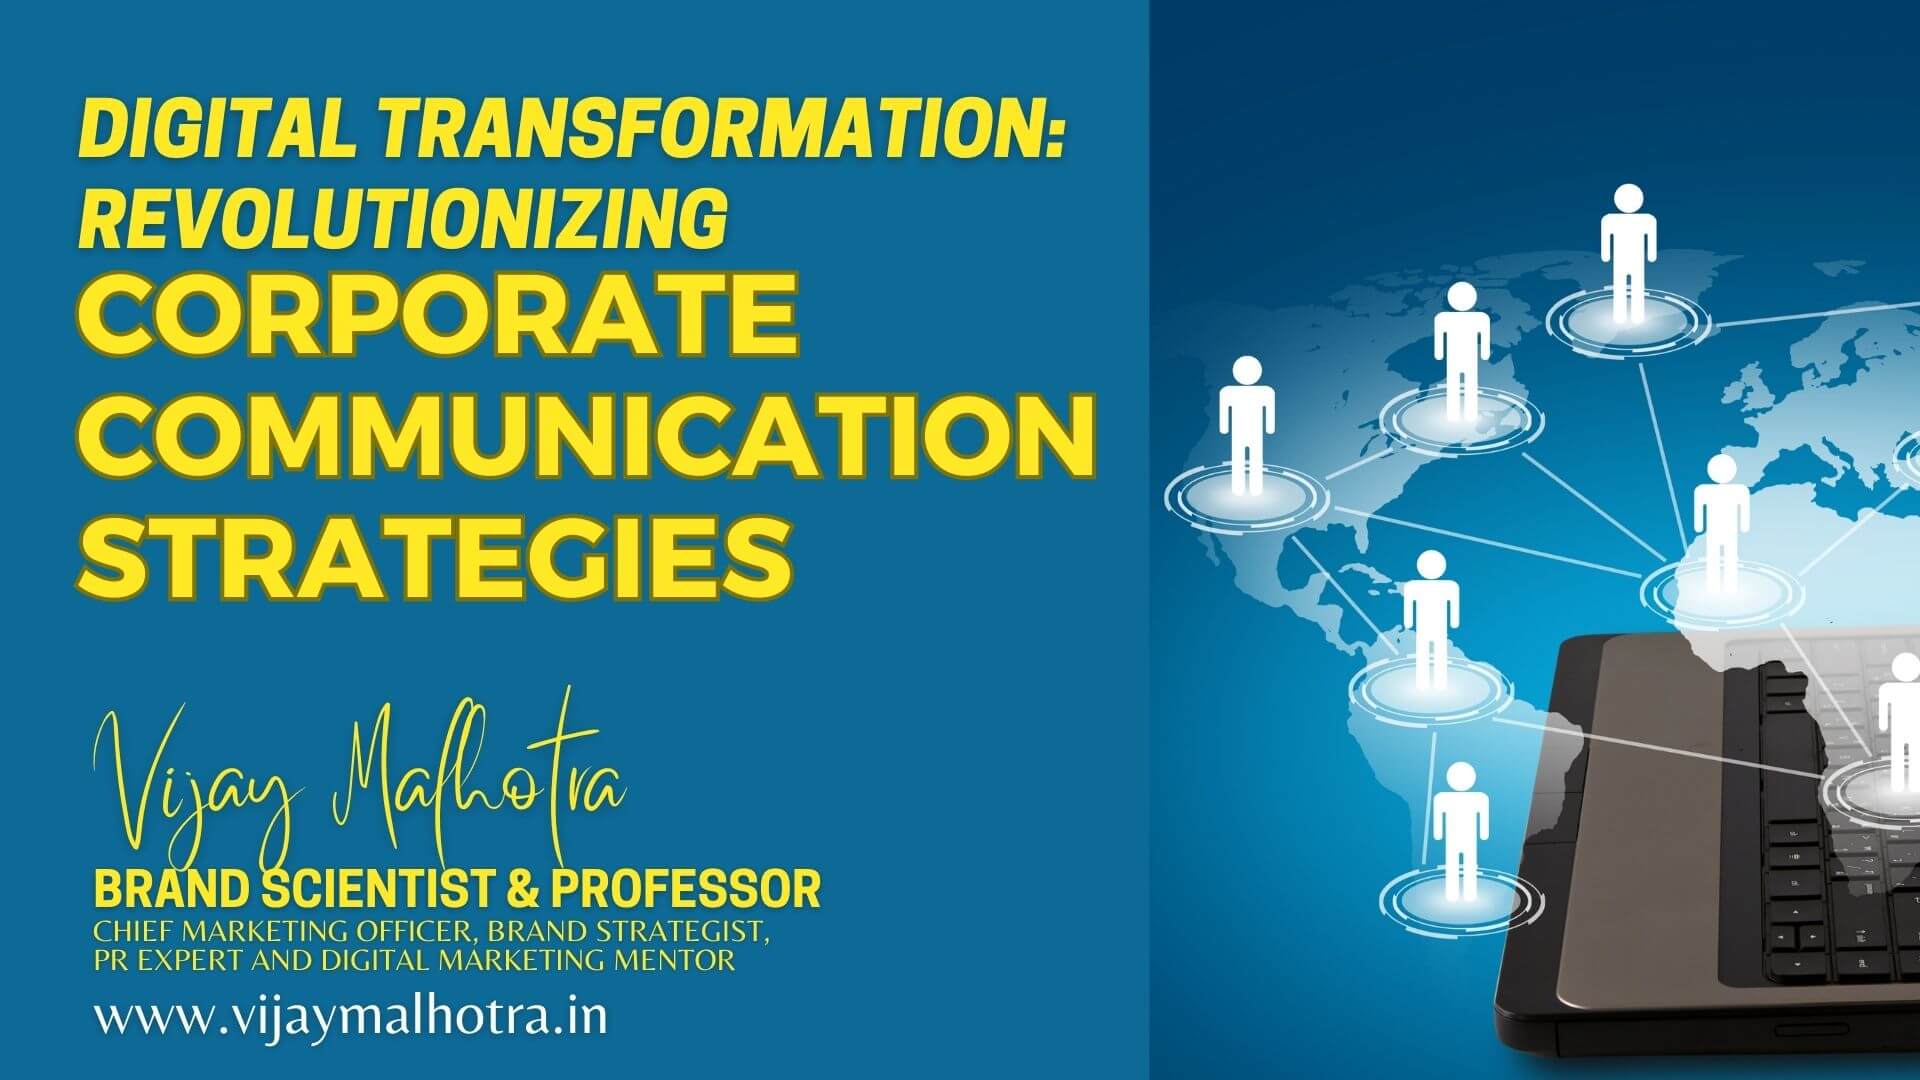 Vijay Malhotra's insights on Digital Transformation in Corporate Communication Strategies